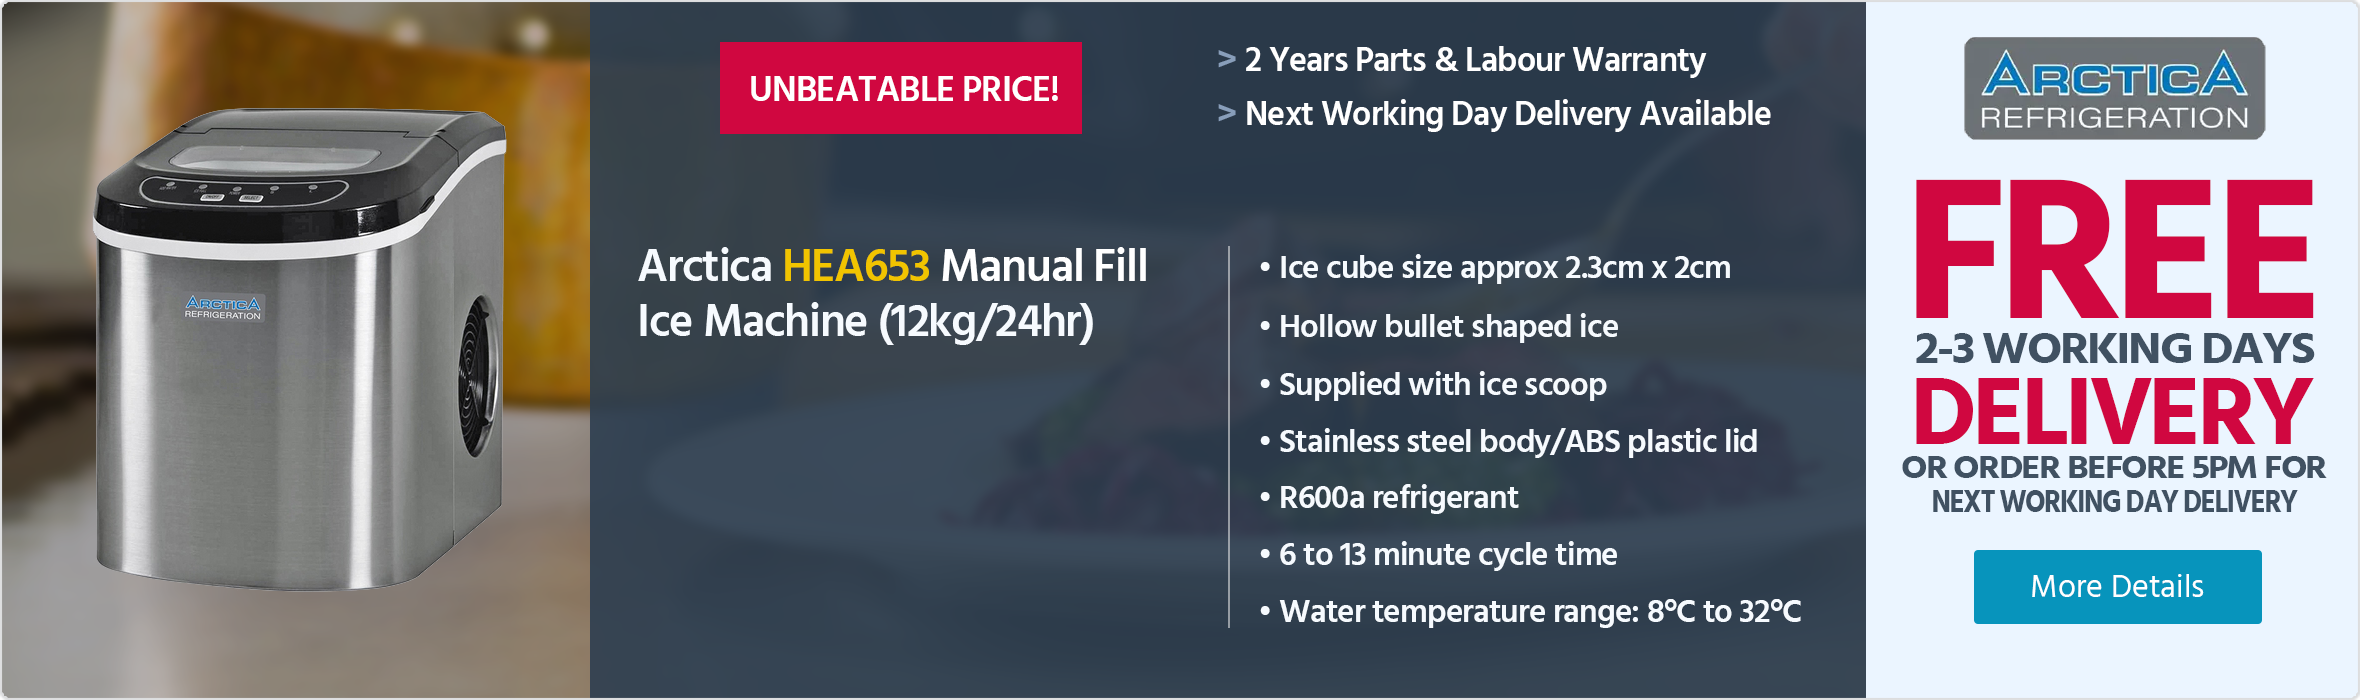 Arctica HEA653 Countertop Manual Fill Ice Machine (12kg/24hr)